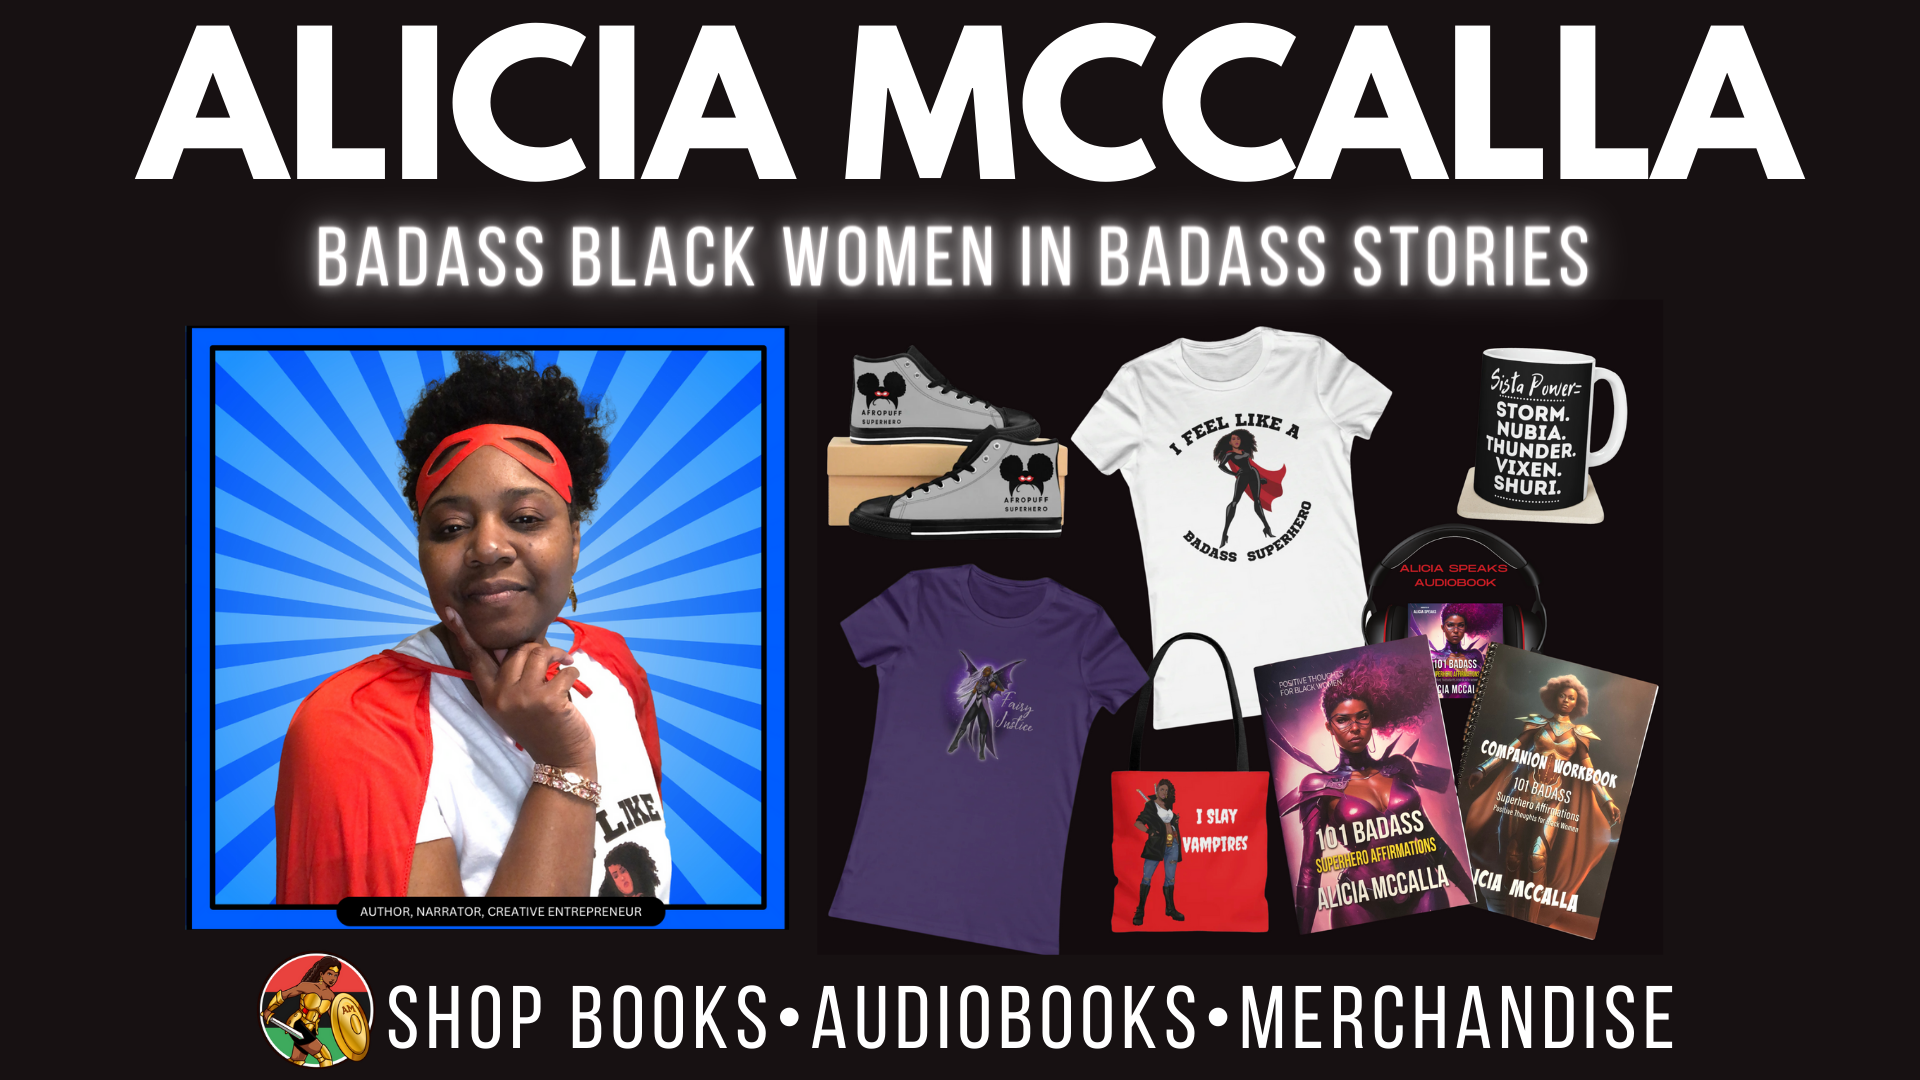 Alicia McCalla Author, Narrator, Creative Merchandiser shops books, audiobooks and merchandise featuring Badass Black women in Badass stories Female Empowerment Brand